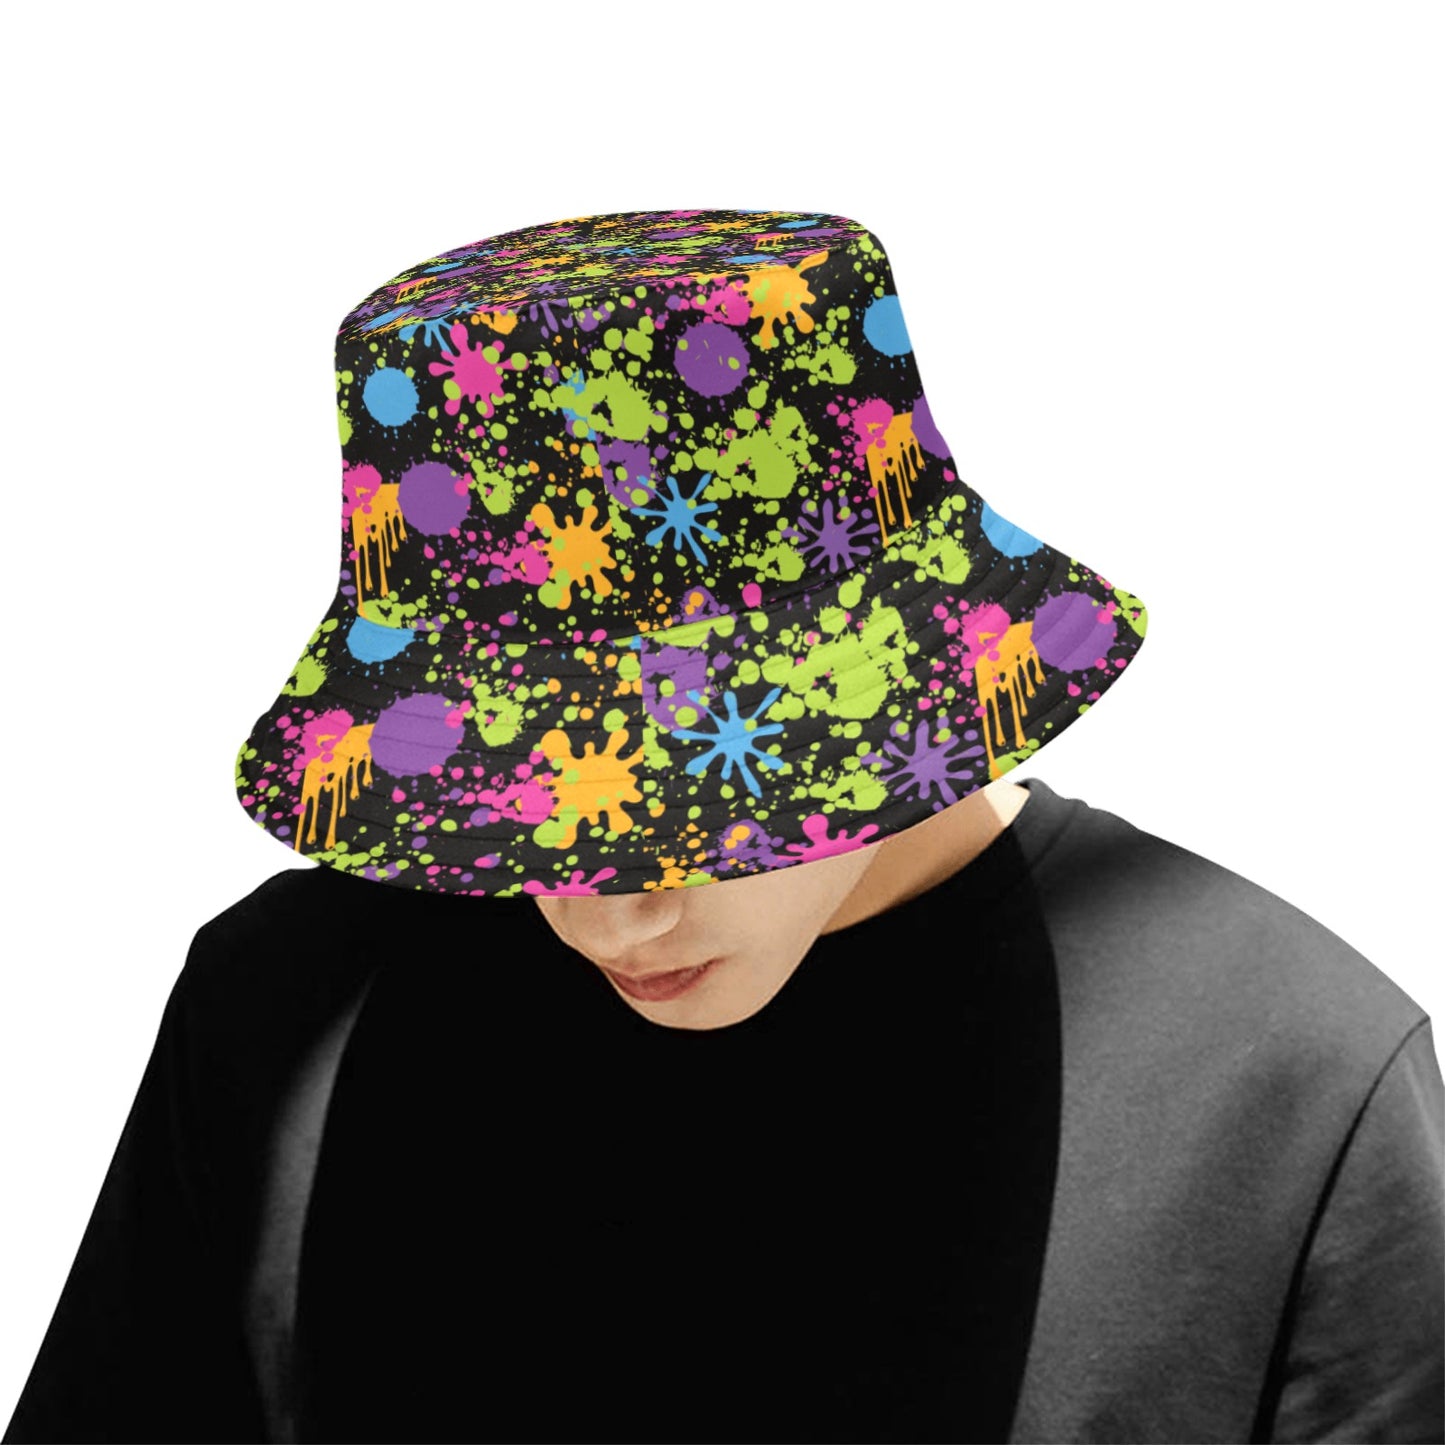 Neon Splash Summer Bucket Hat